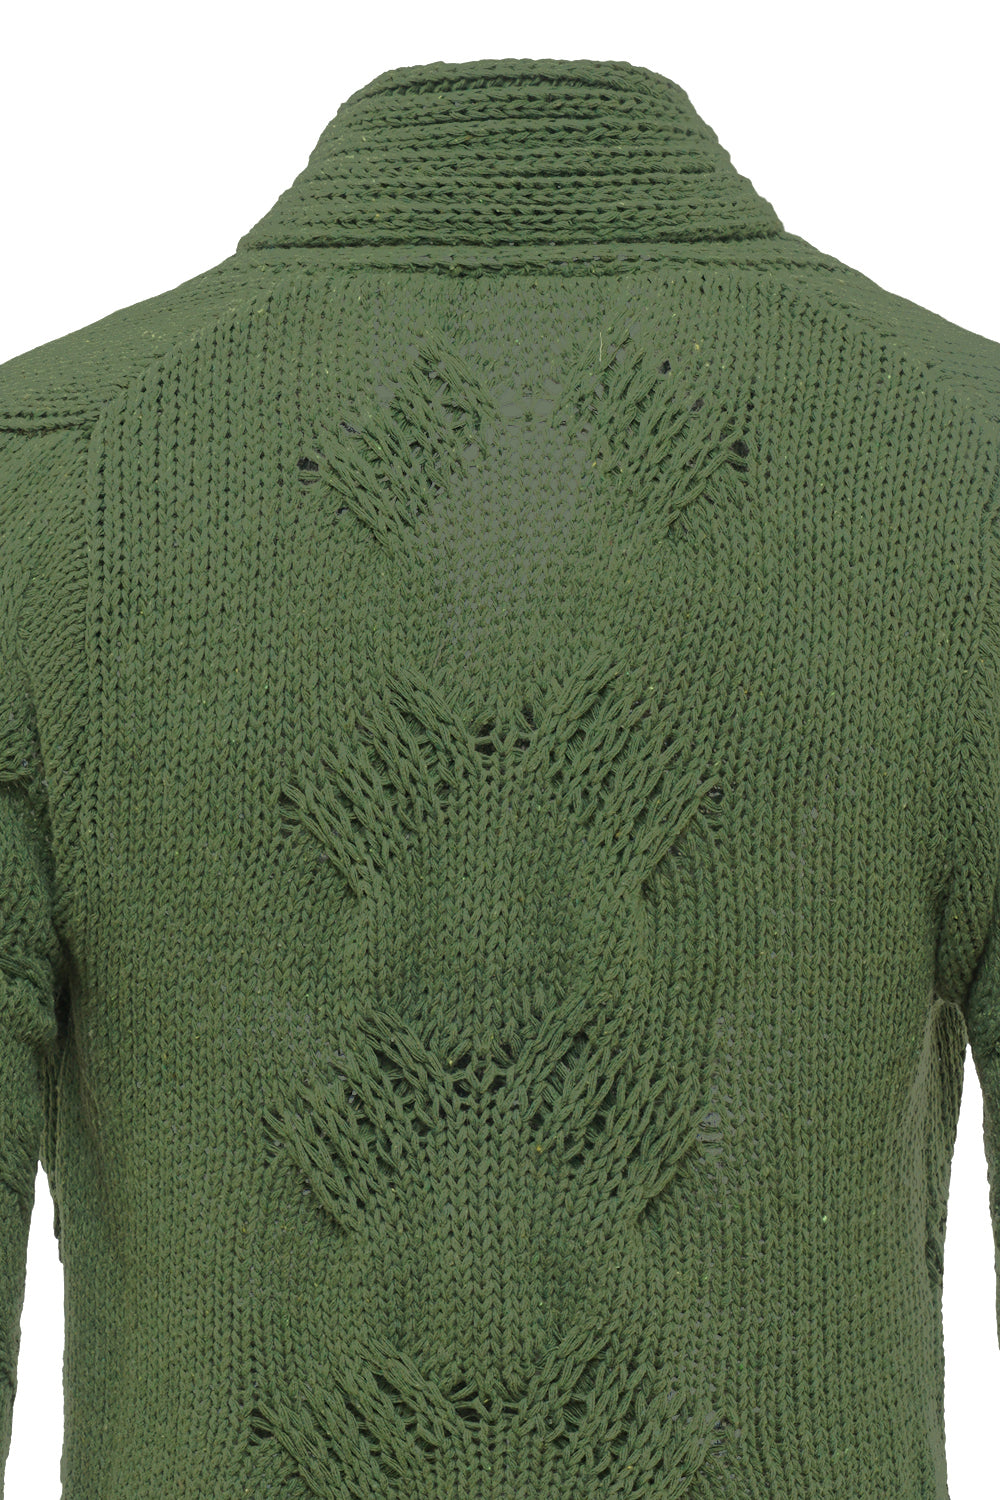 Green Shawl Collar Long Sleeves Men's Cardigan Sweater